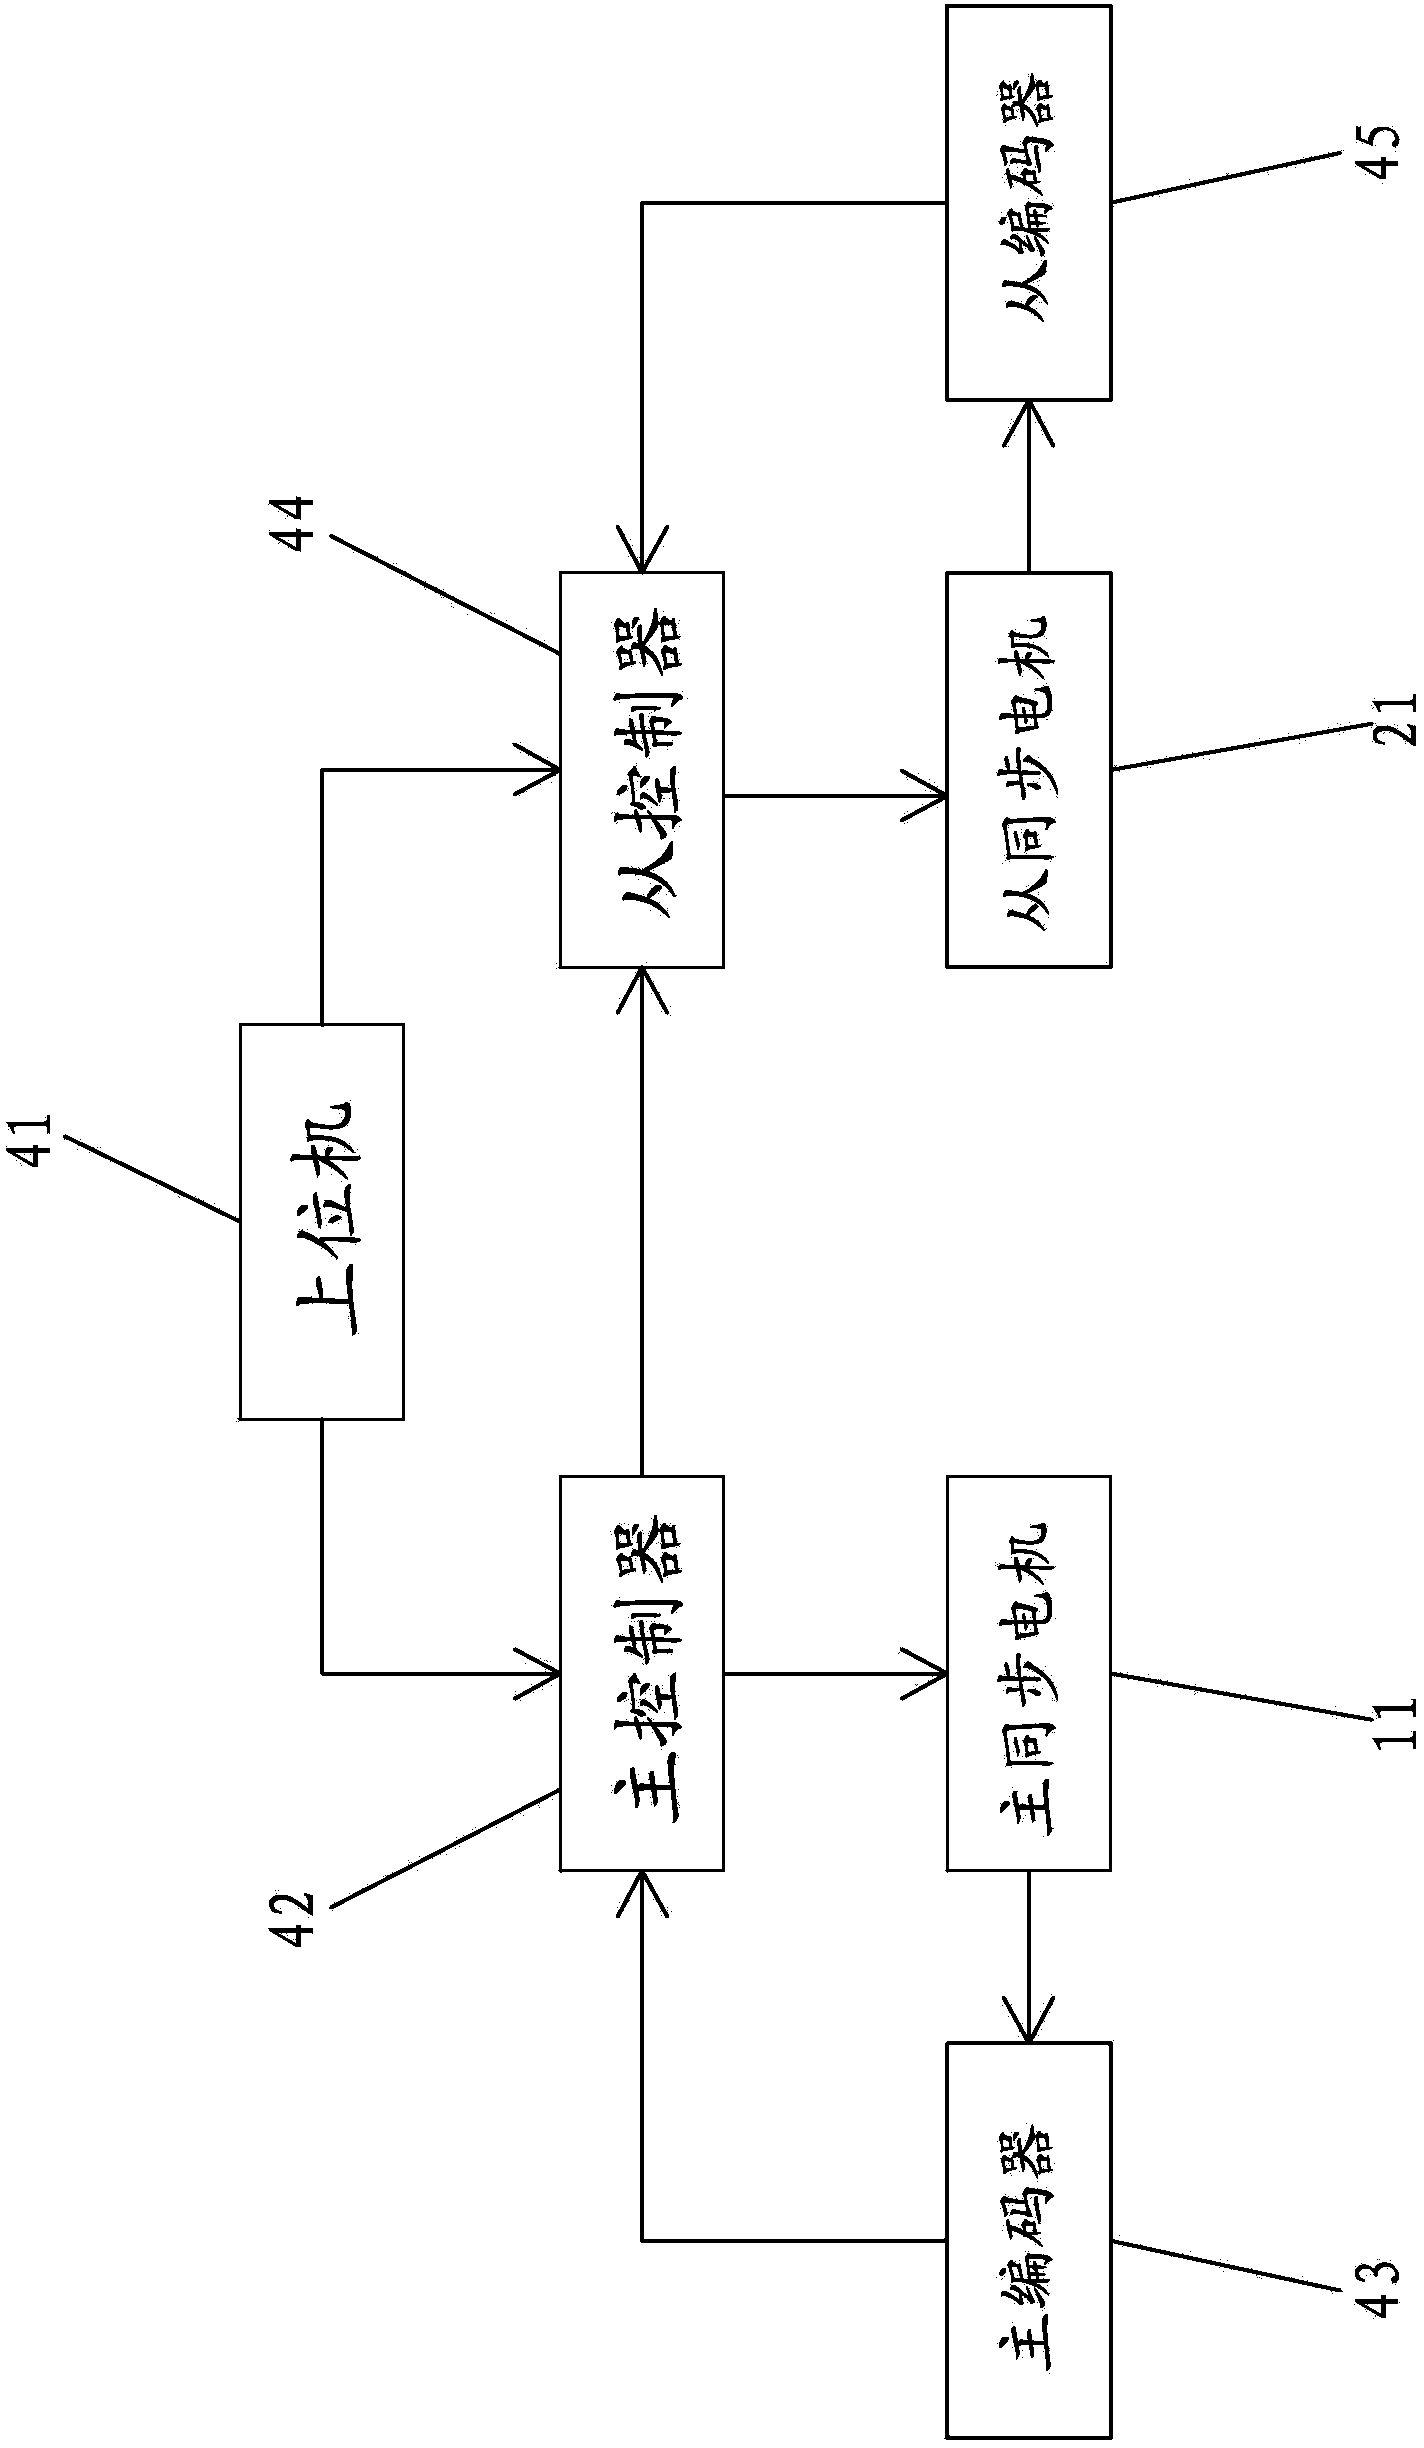 Double-drive mechanism of pumping unit